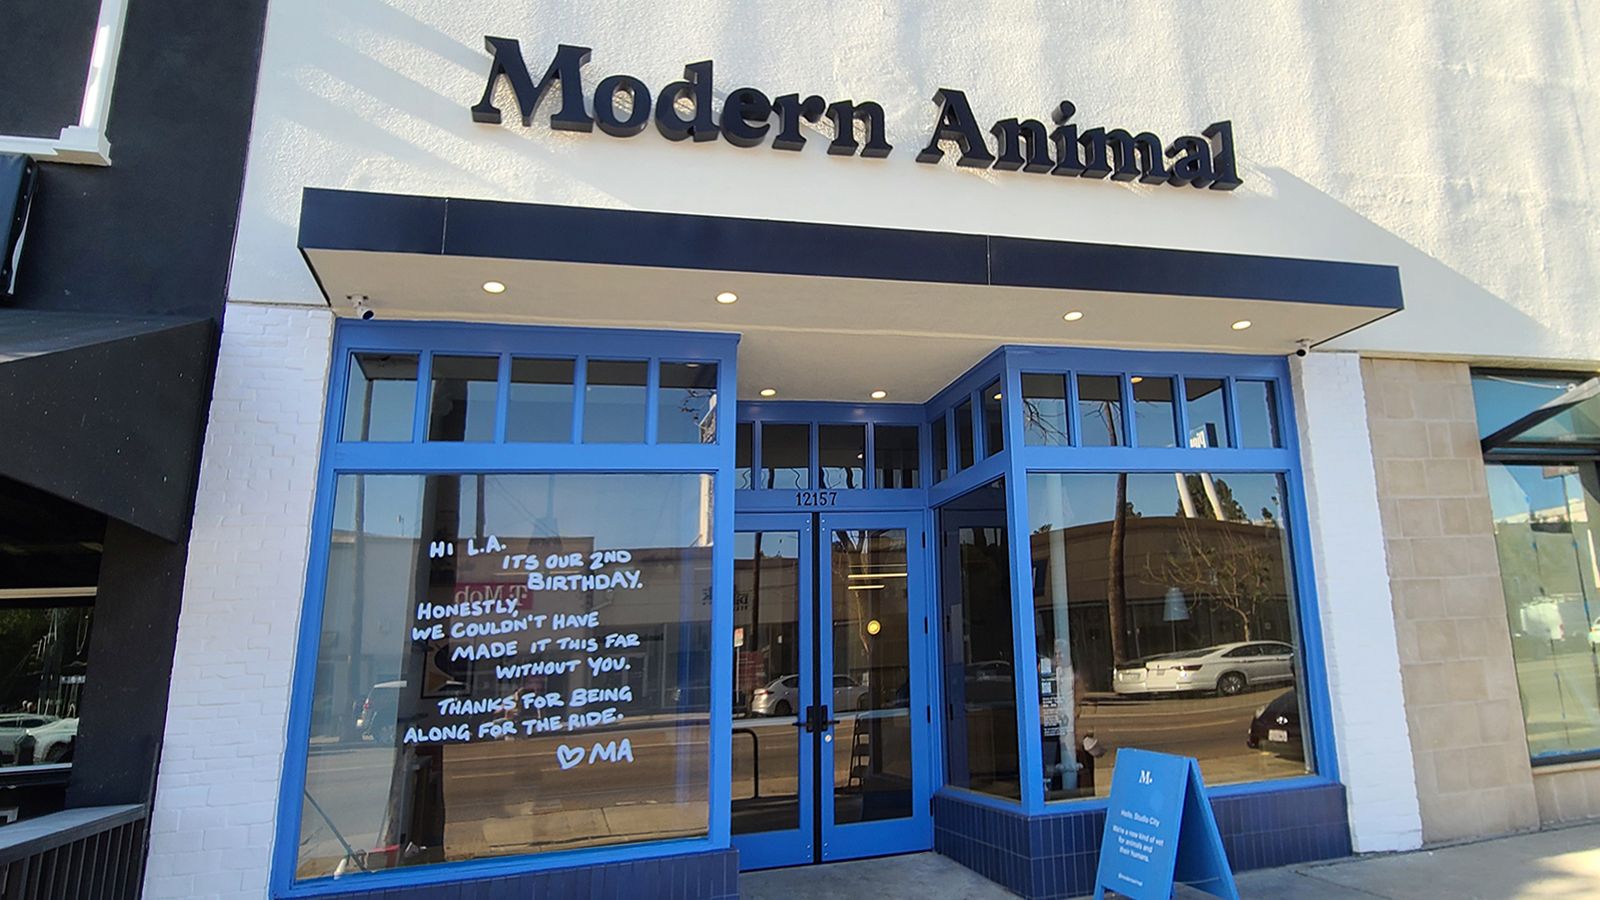 Modern Animal building signage